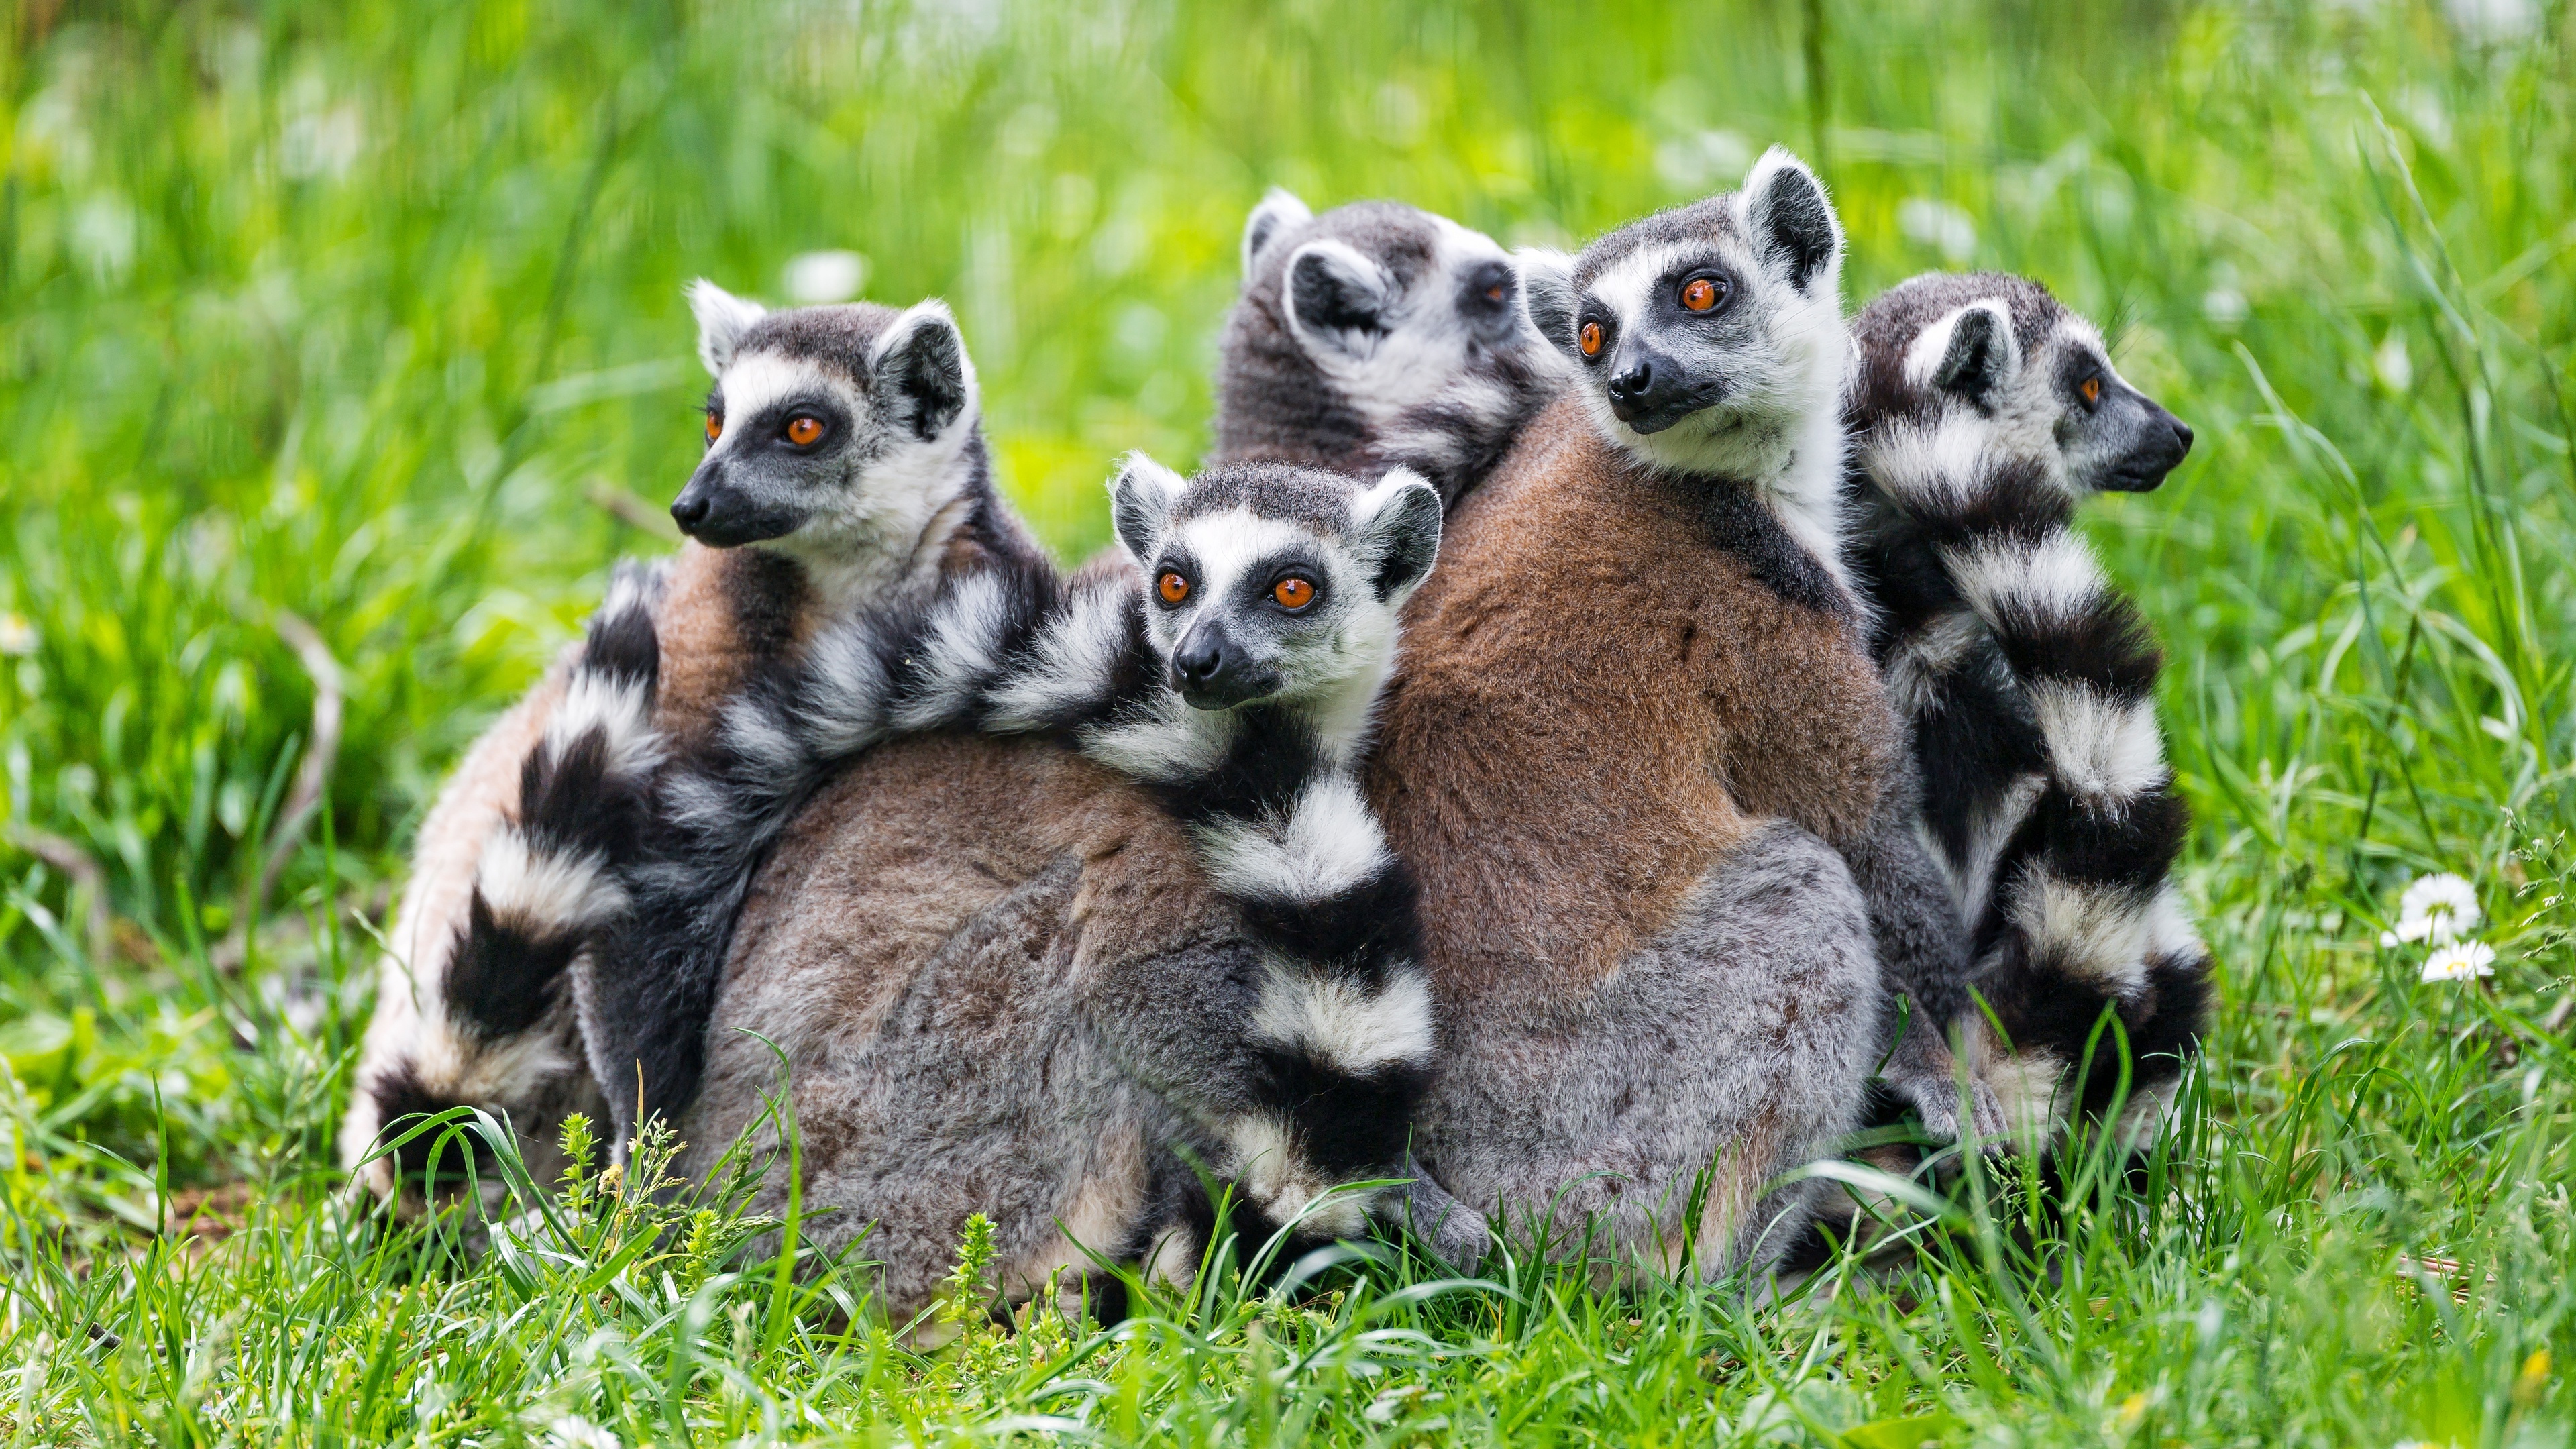 Lemur 4K ultra HD wallpaper, Wildlife appreciation, Primate beauty, Nature's marvels, 3840x2160 4K Desktop